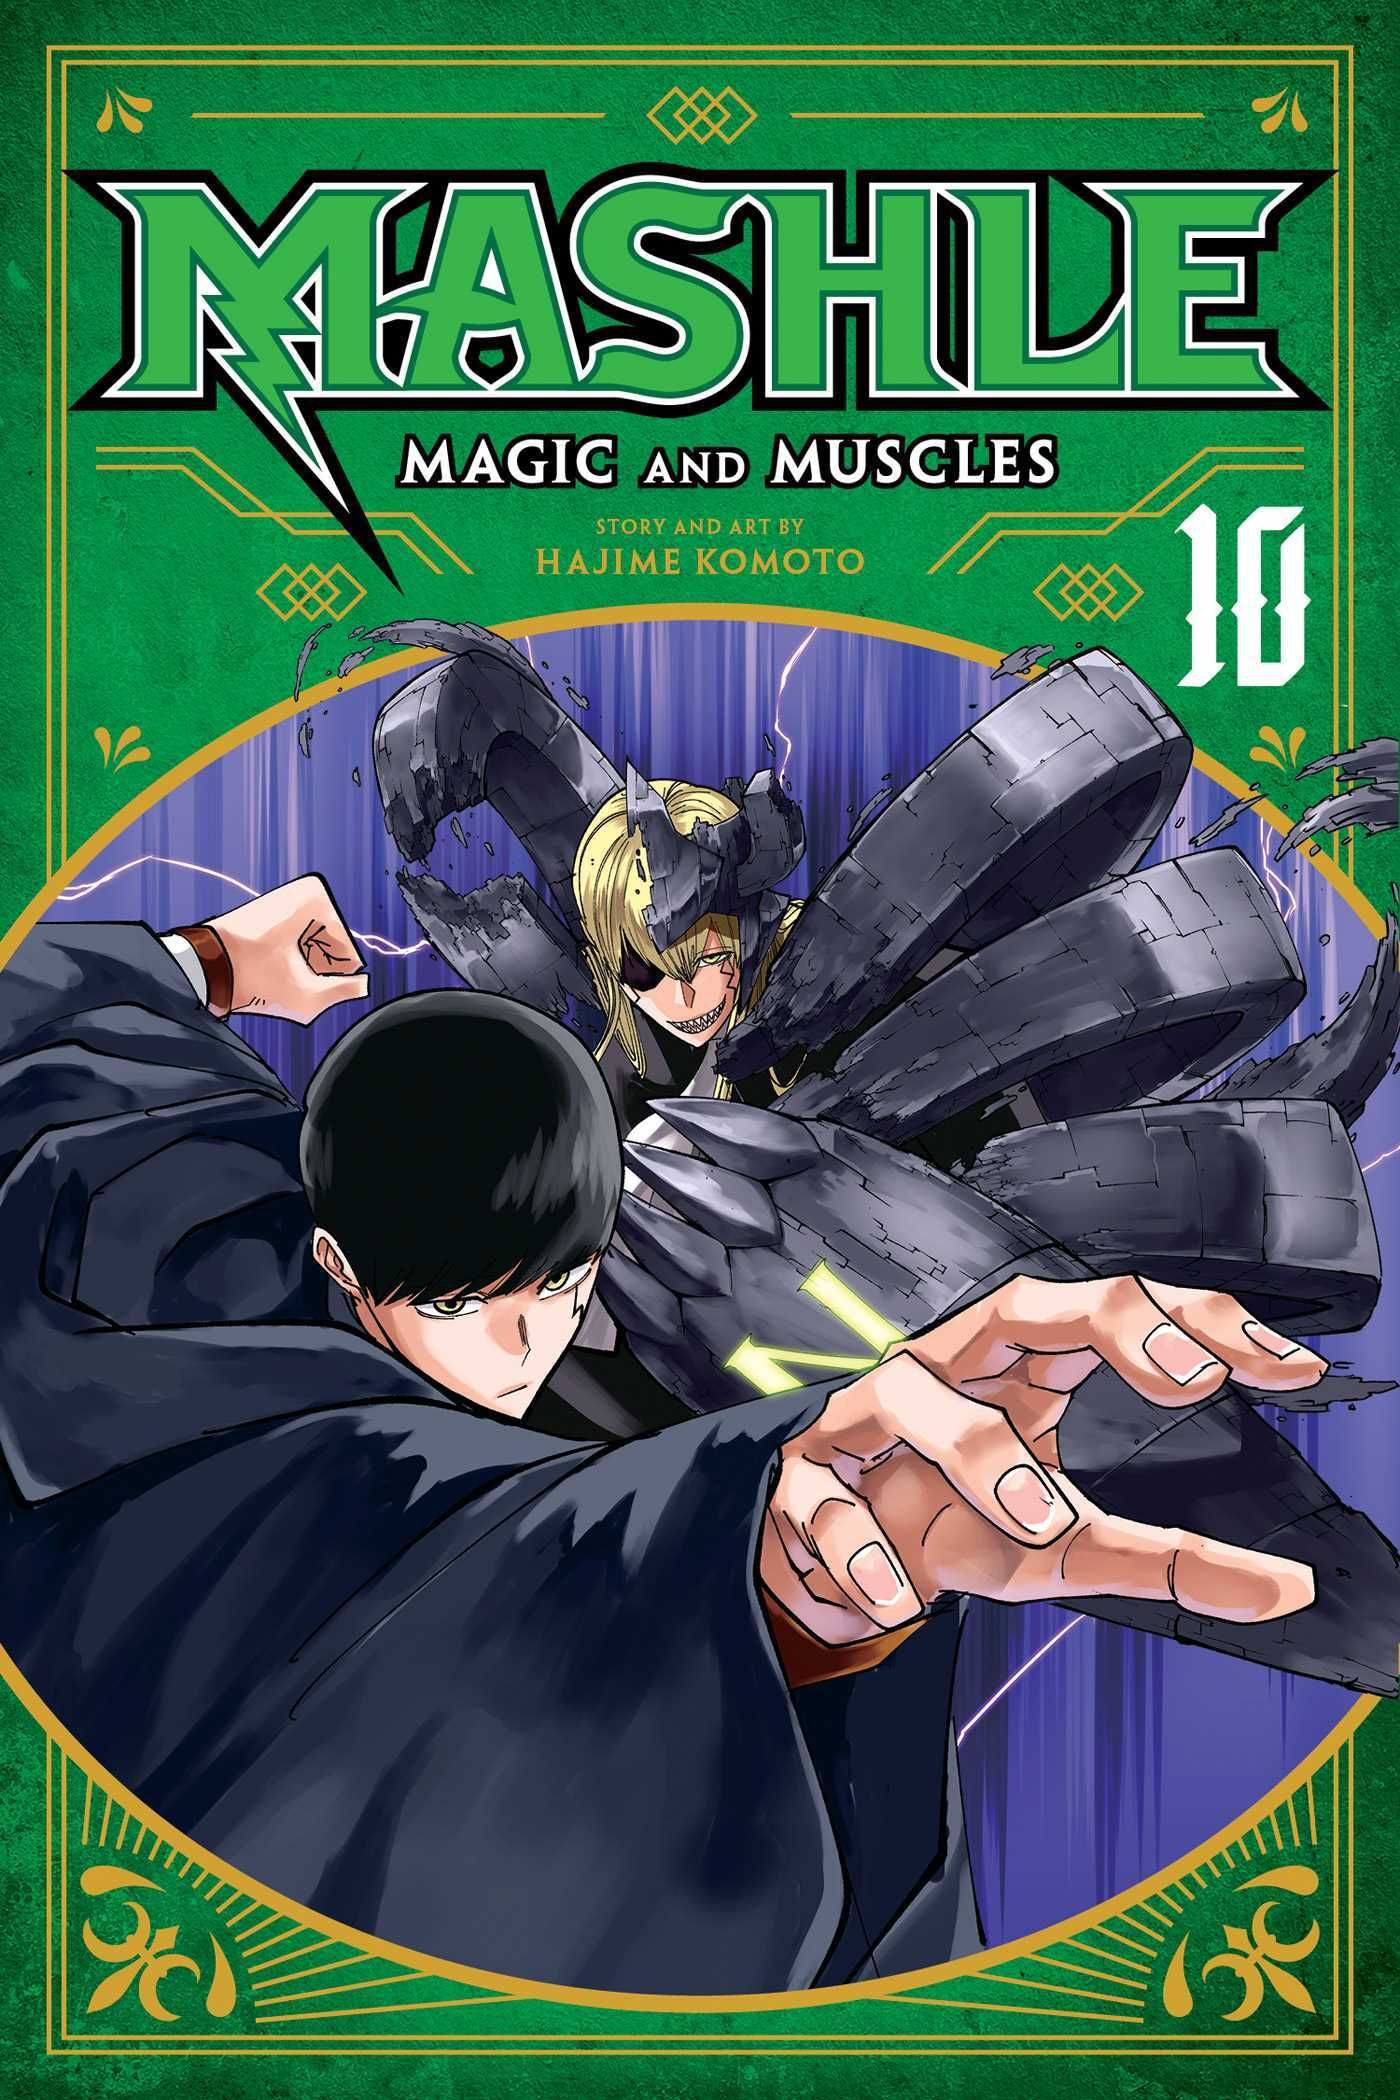 Adachi and Shimamura (Light Novel) Vol. 2 on Apple Books